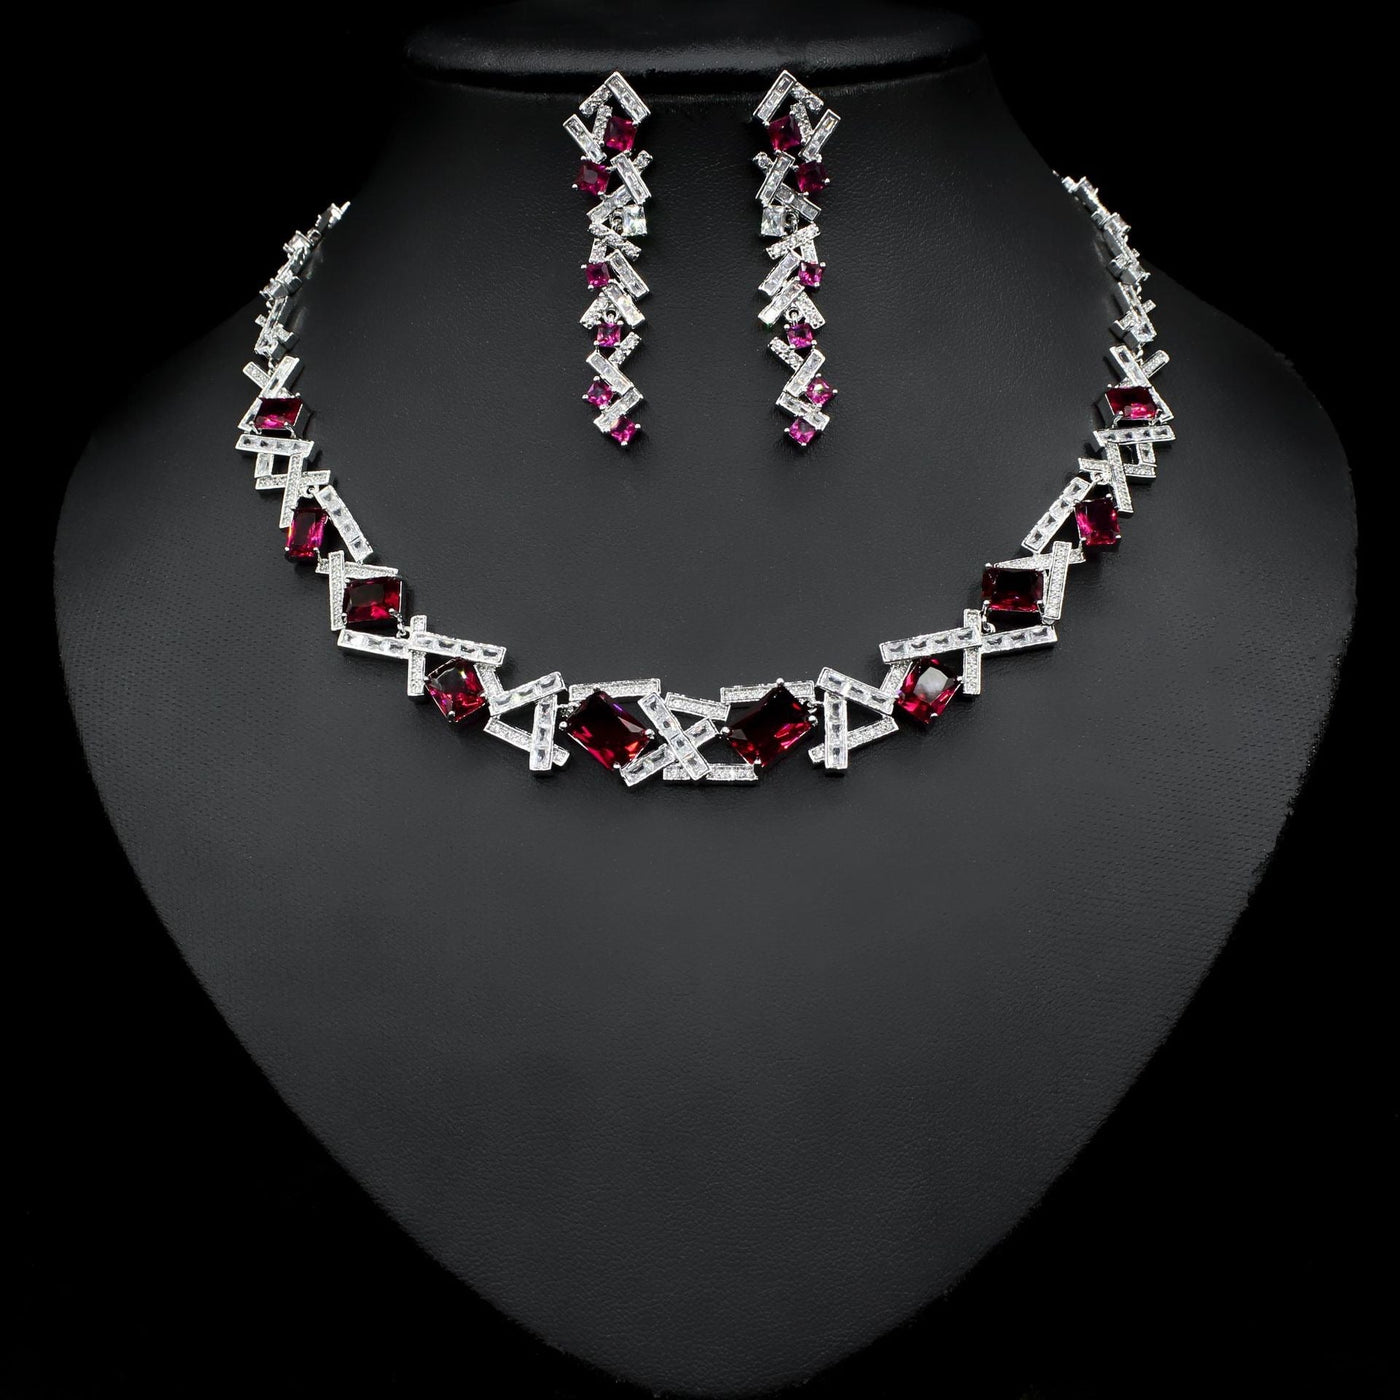 Sparkling Net-Like Tree Branch Collar Necklace and Earrings - Jewlery Set - WonderlandByLilian